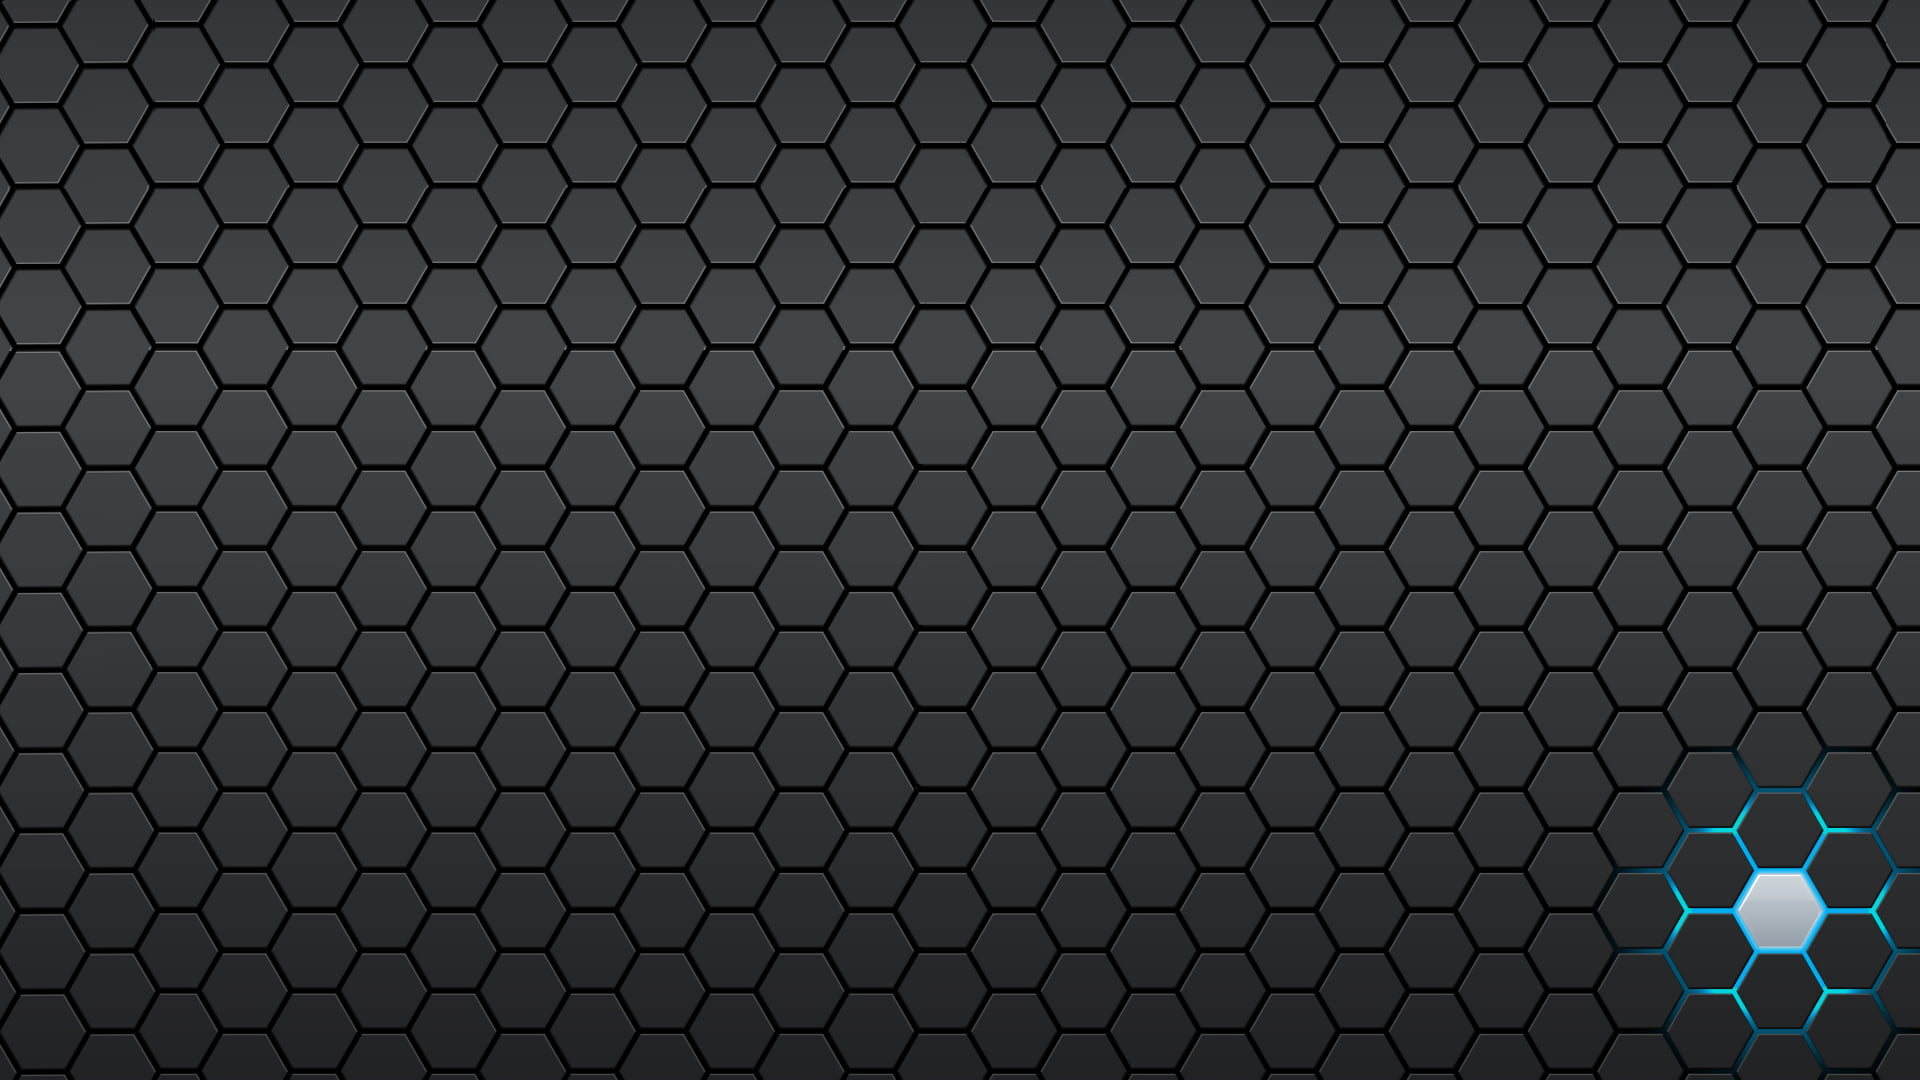 Wallpaper of black and gray honeycomb pattern digital wallpaper, abstract